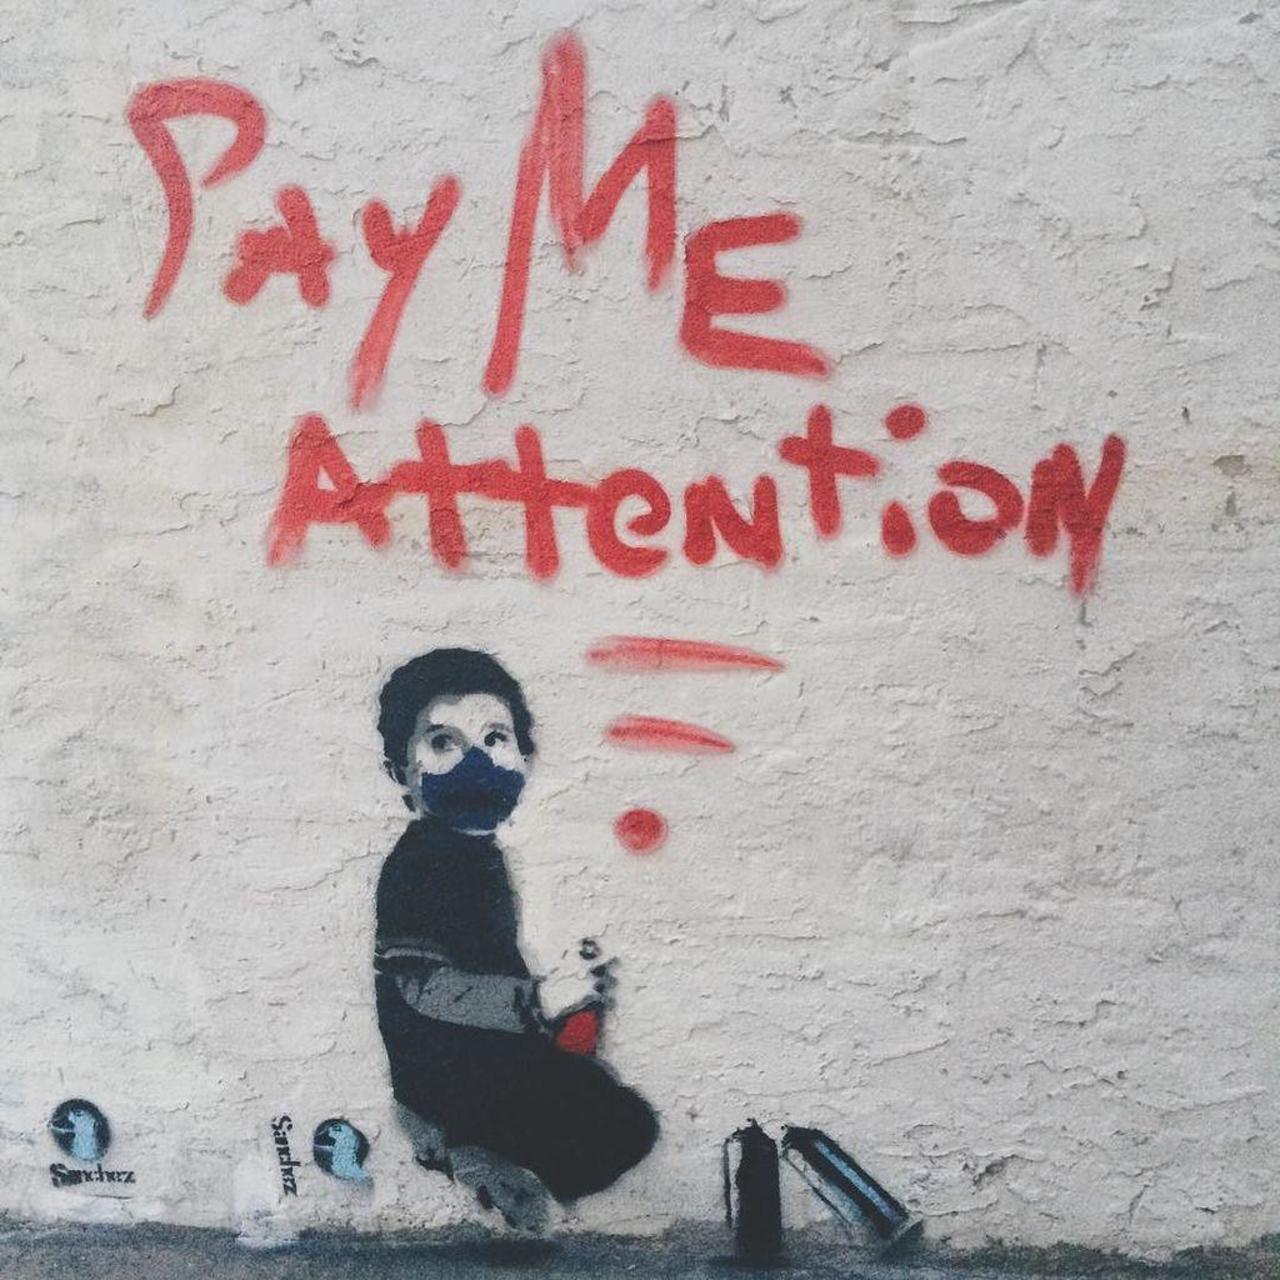 RT @artpushr: via #evanpolk "http://bit.ly/1OlAWyw" #graffiti #streetart http://t.co/ktnktyVBXR